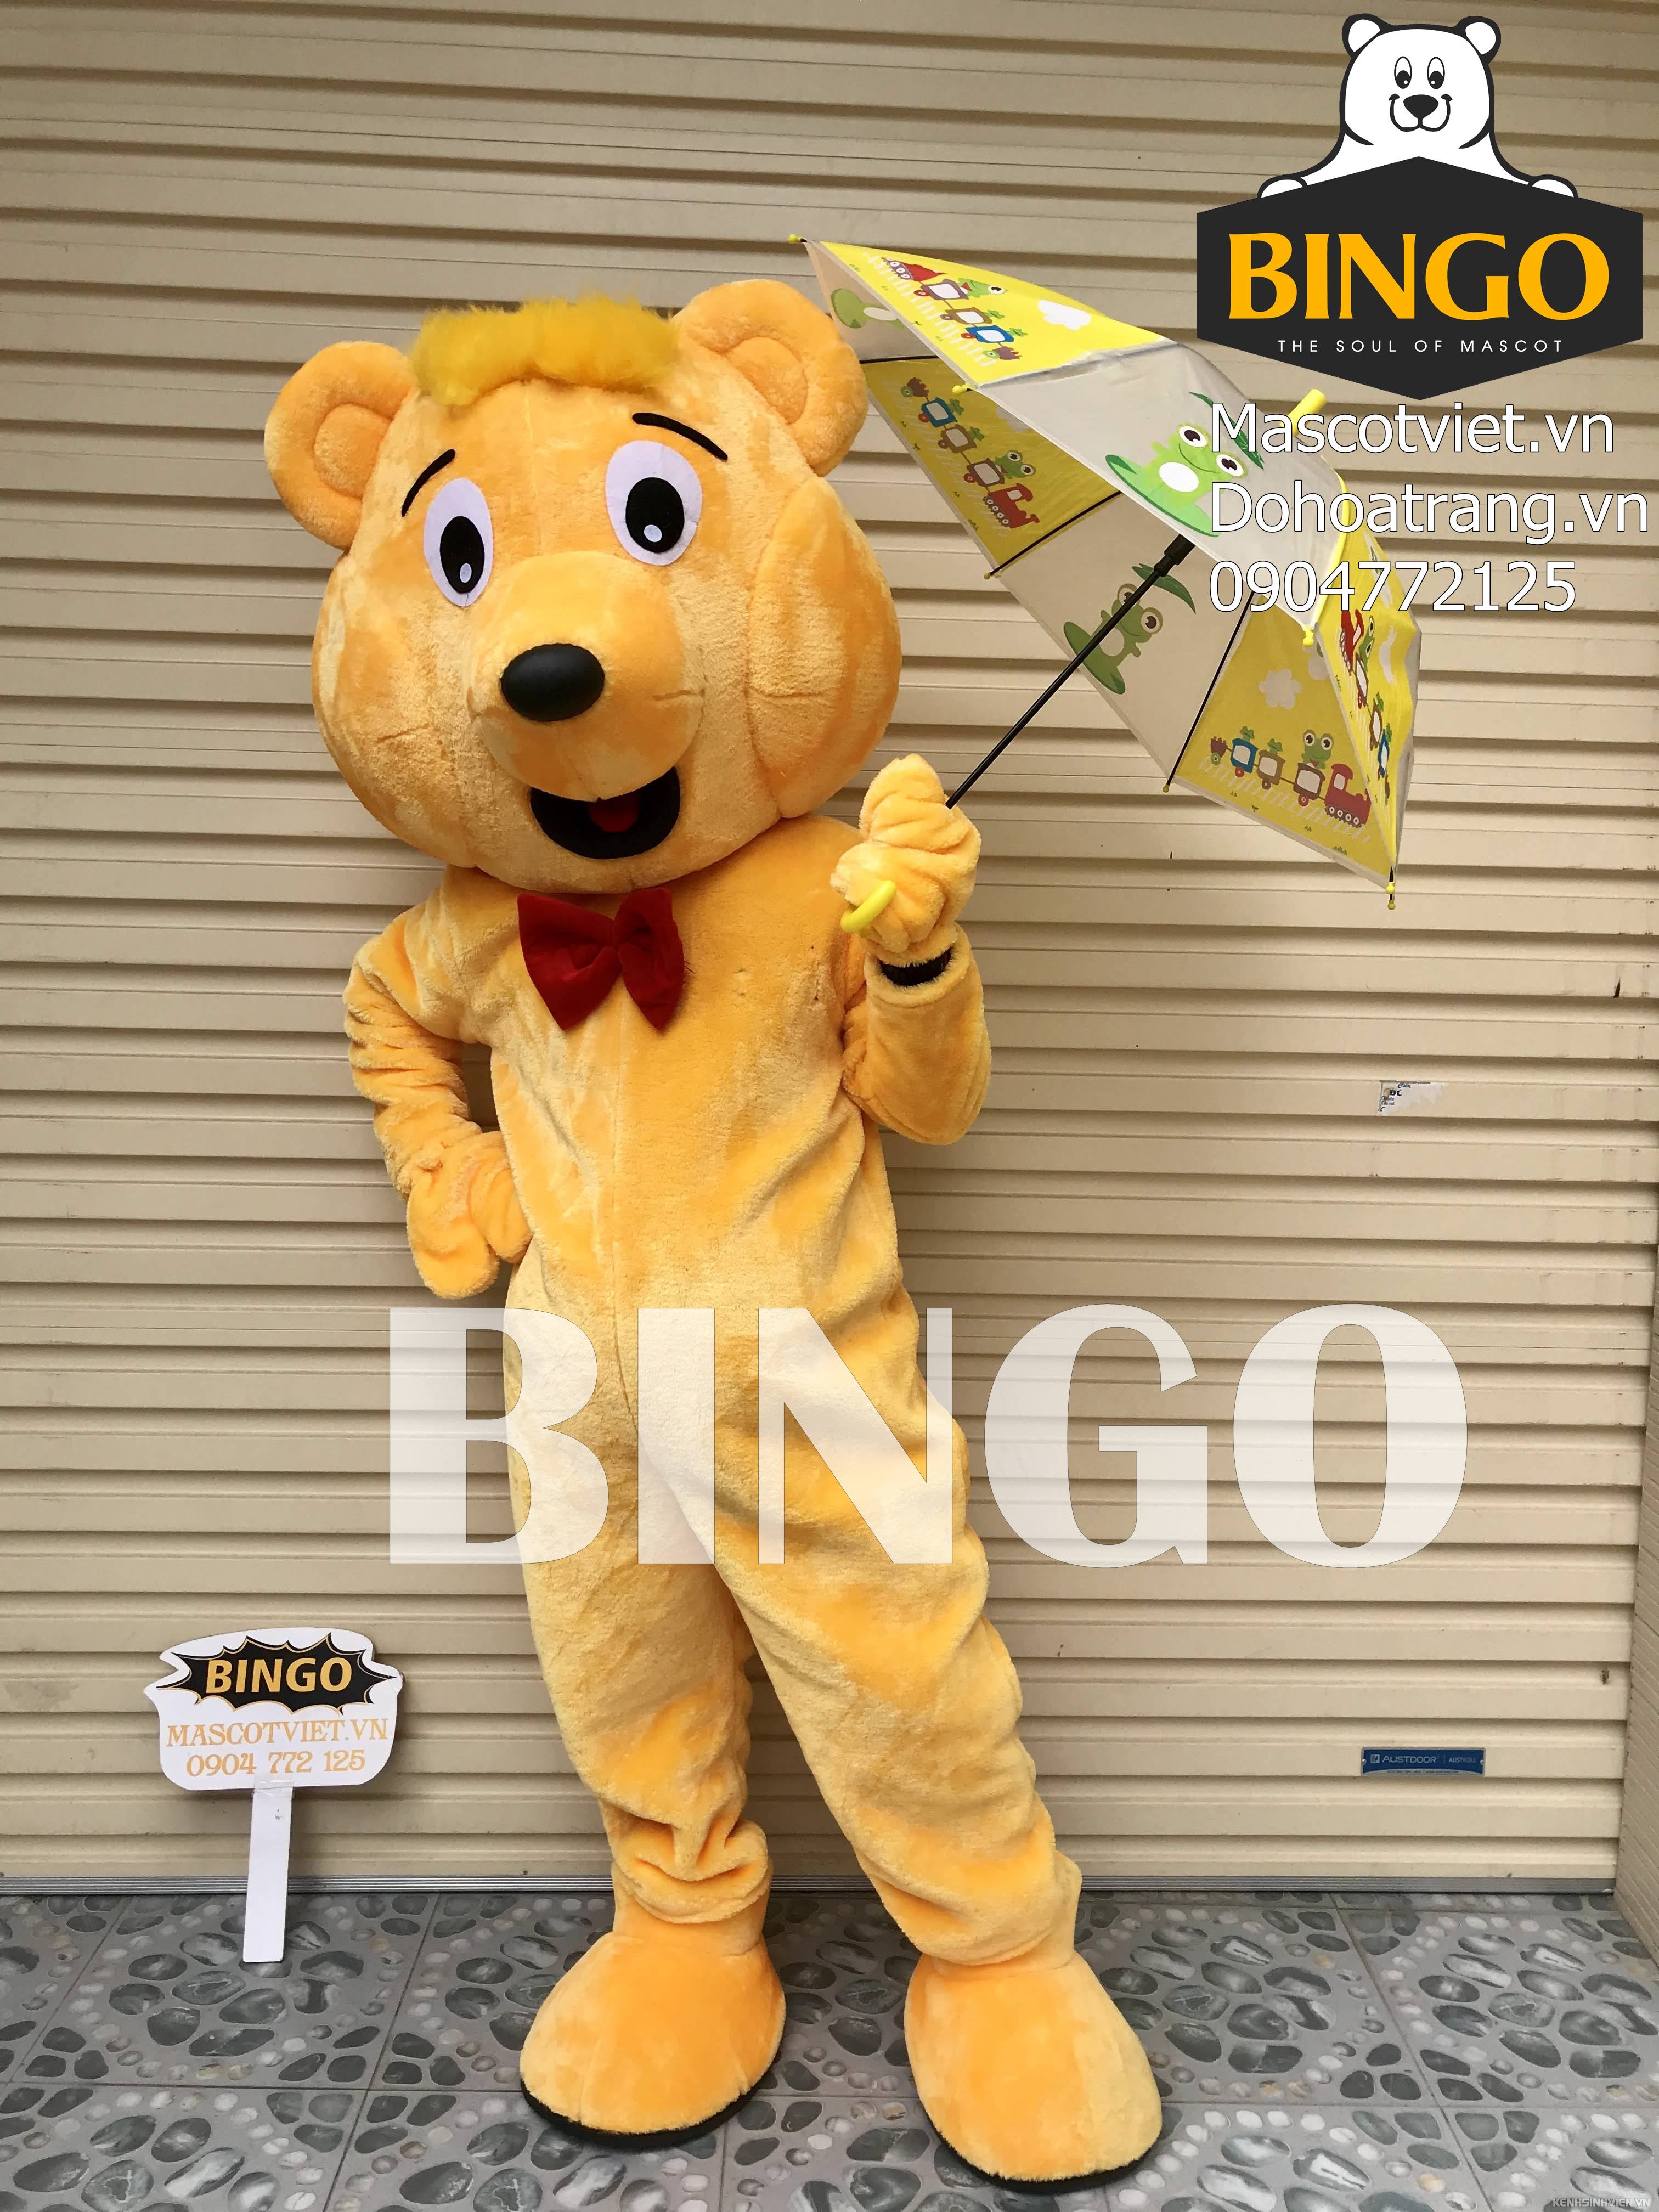 mascot-con-gau-04-bingo-costumes-bingo-costumes-0904772125-2-.jpg